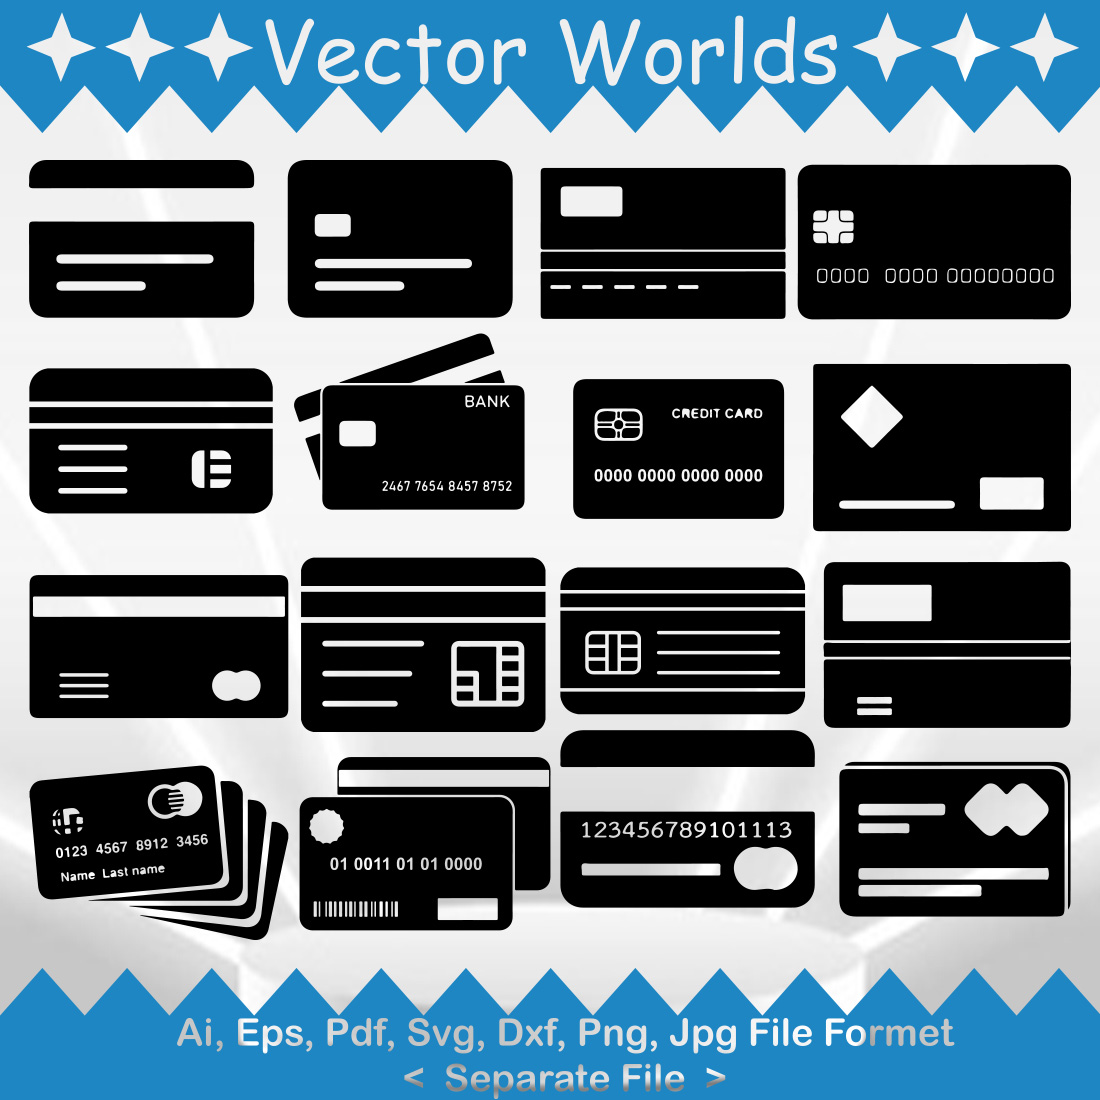 Credit Card SVG Vector Design cover image.